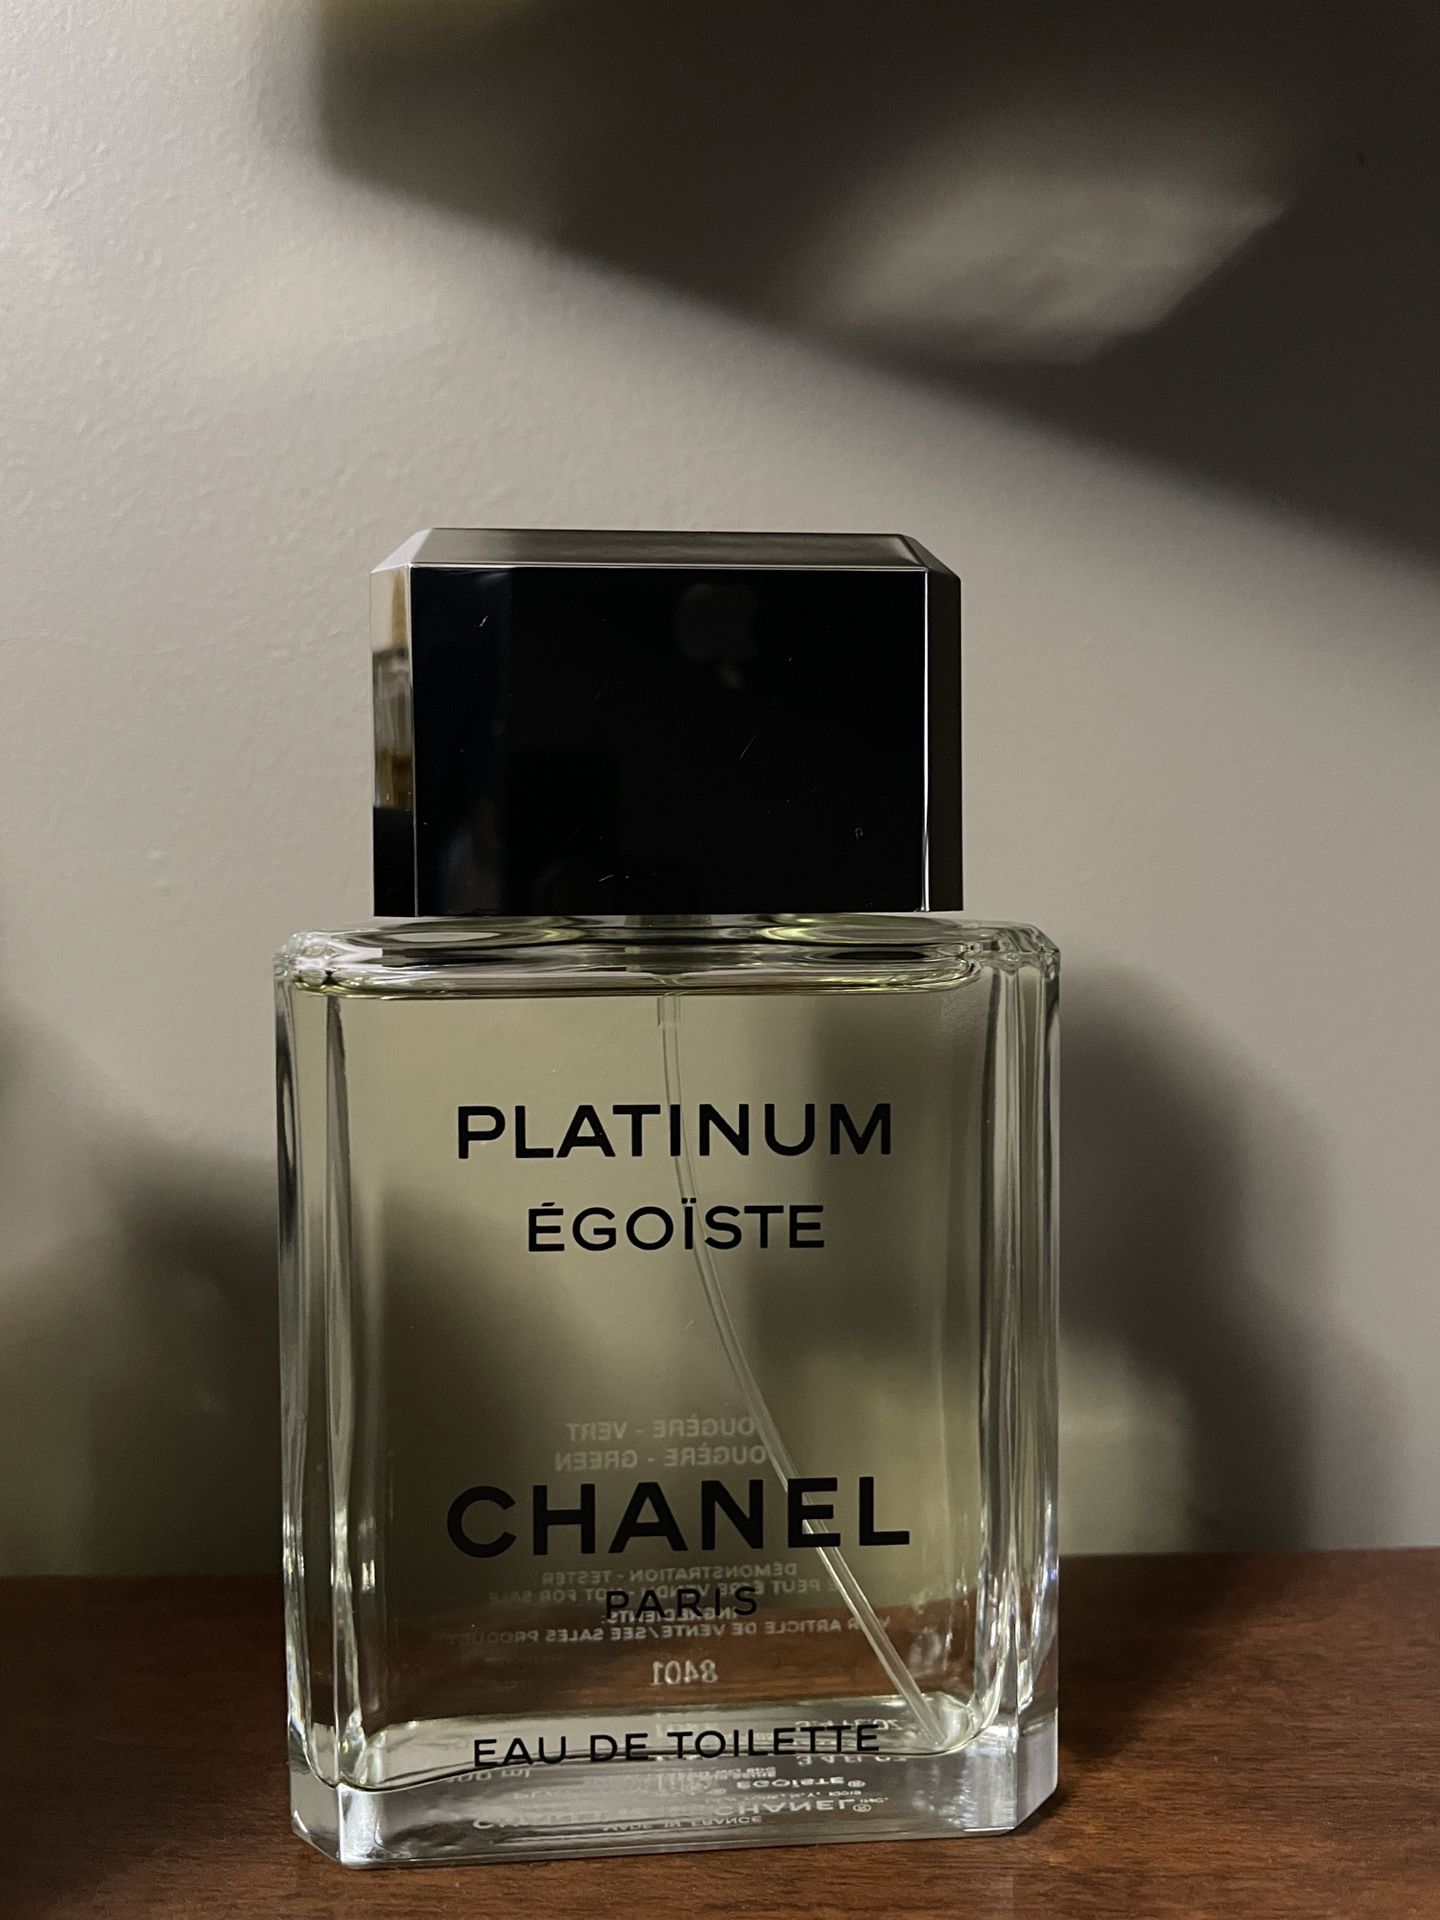 Chanel Platinum Egoiste EDT Cologne Fragrance 